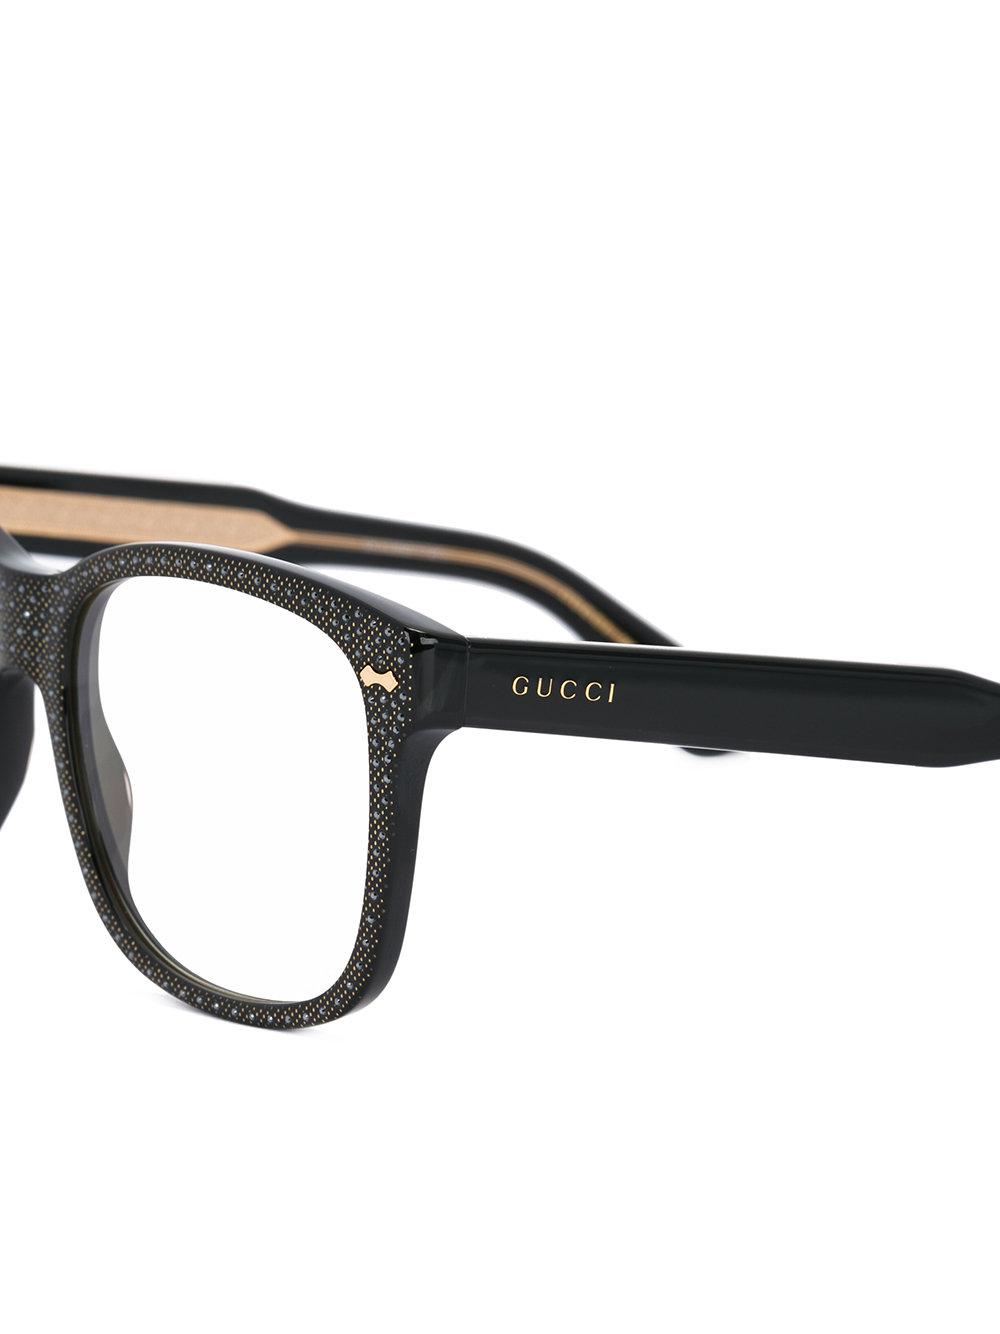 Gucci Square Frame Rhinestone Glasses in Black | Lyst